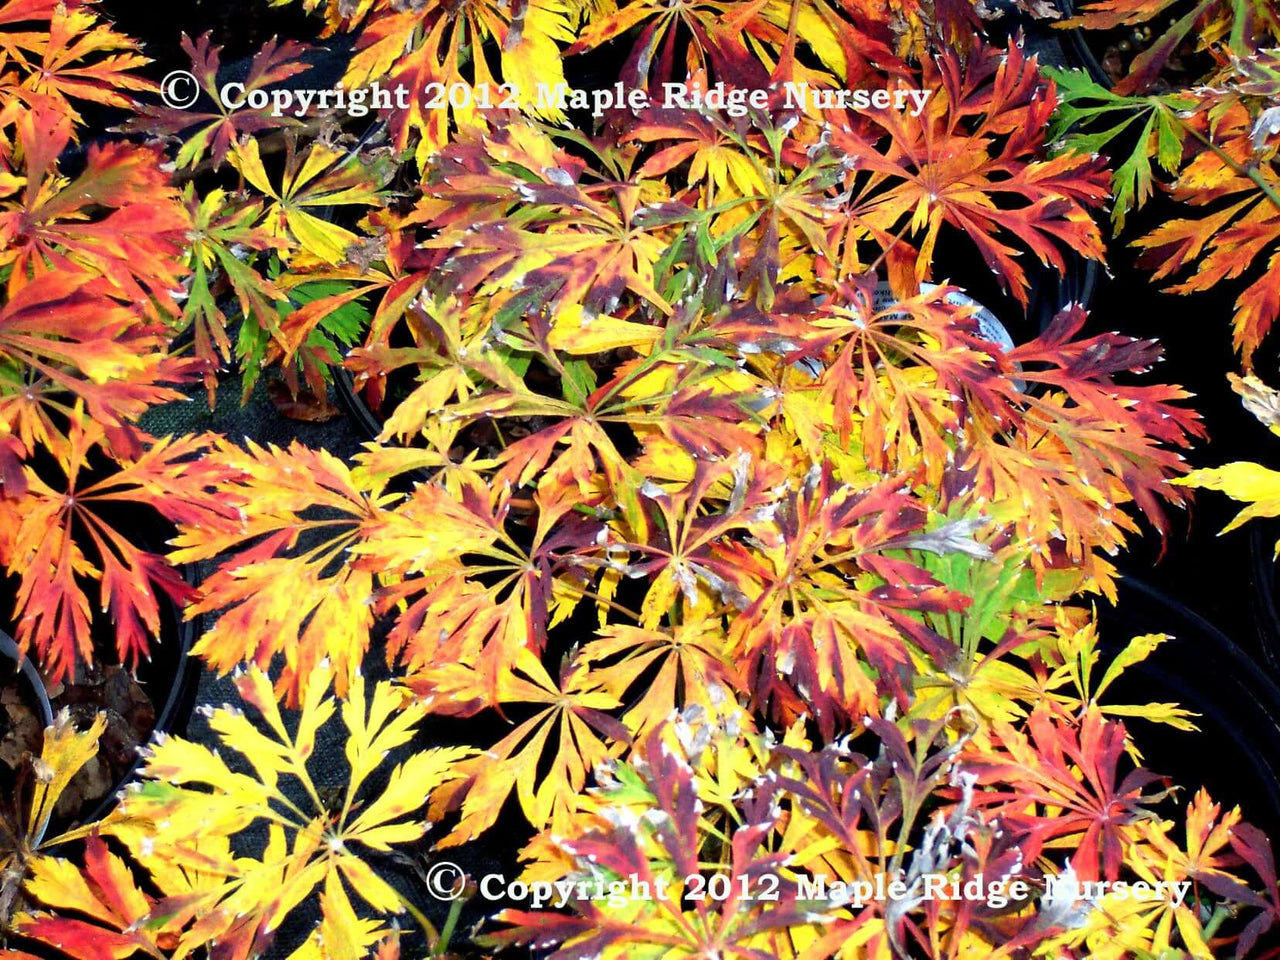 Acer japonicum 'Green Cascade' - mapleridgenursery